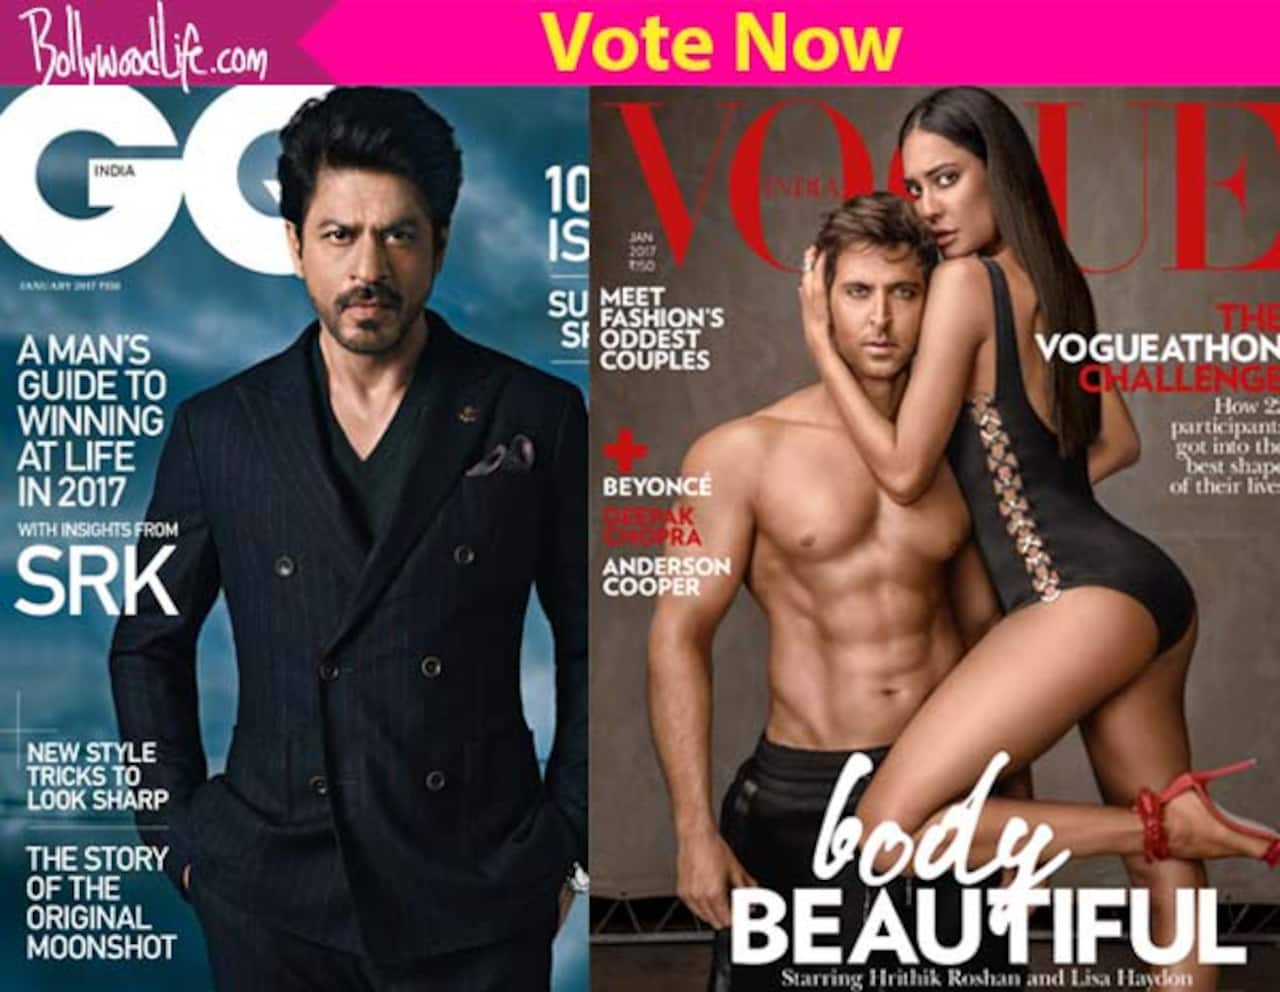 Shah Rukh Khan S Brooding Avatar On Gq Mag Or Hrithik Roshan Lisa Haydon S Sexed Up Vogue